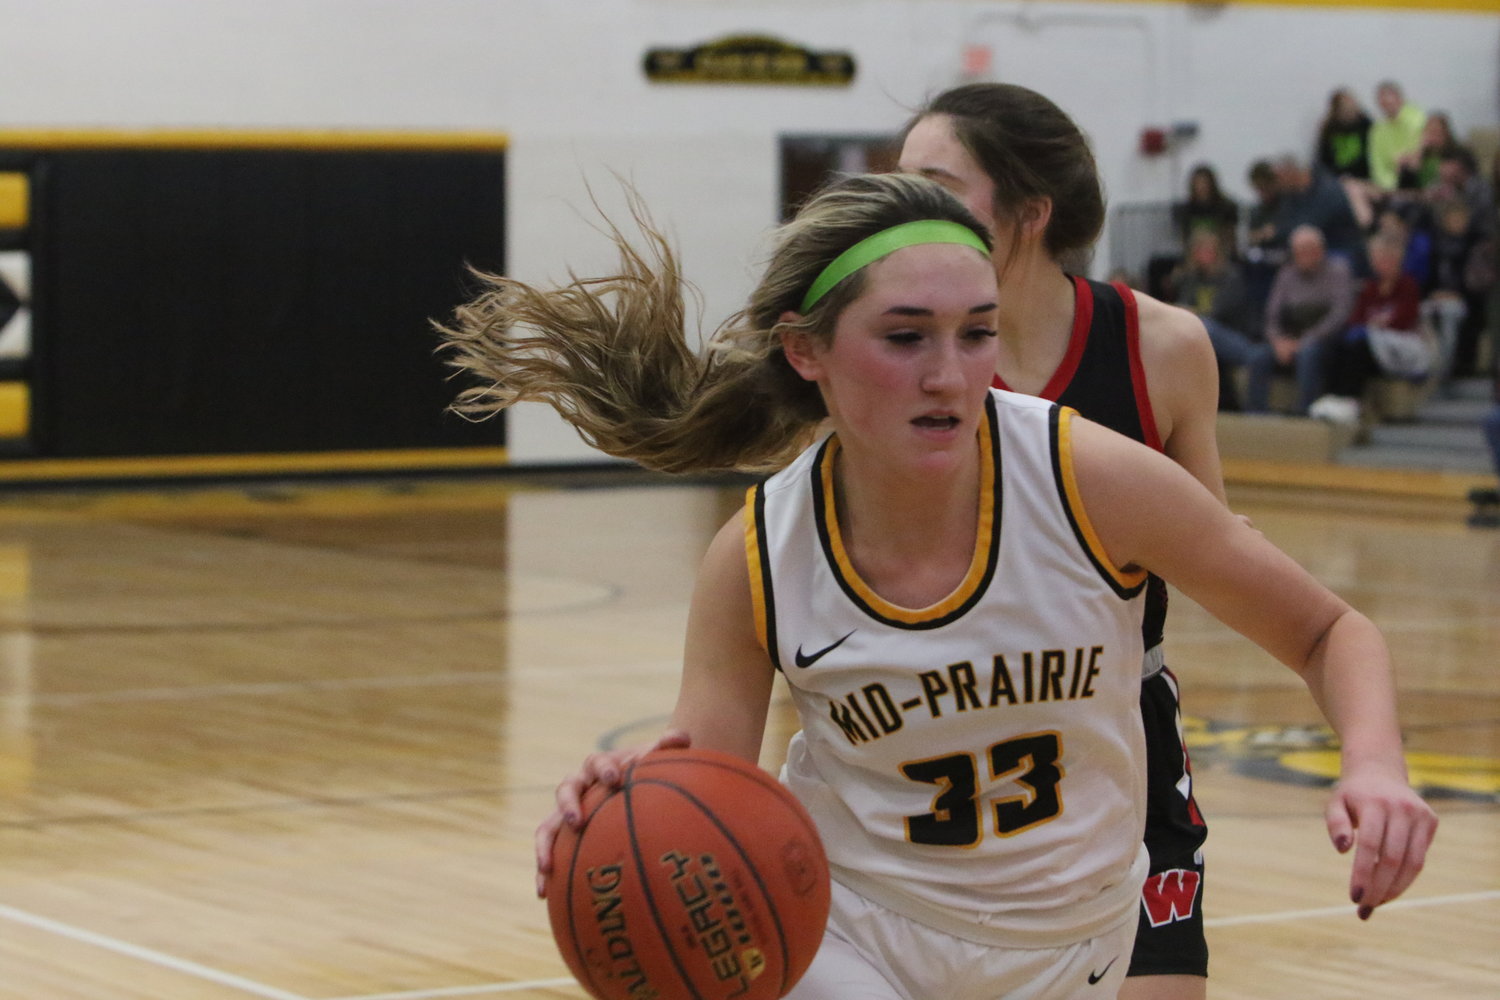 Mid-Prairie senior forward Maddie Nonnenmann dribbles past a Williamsburg defender in Monday's girls basketball game.